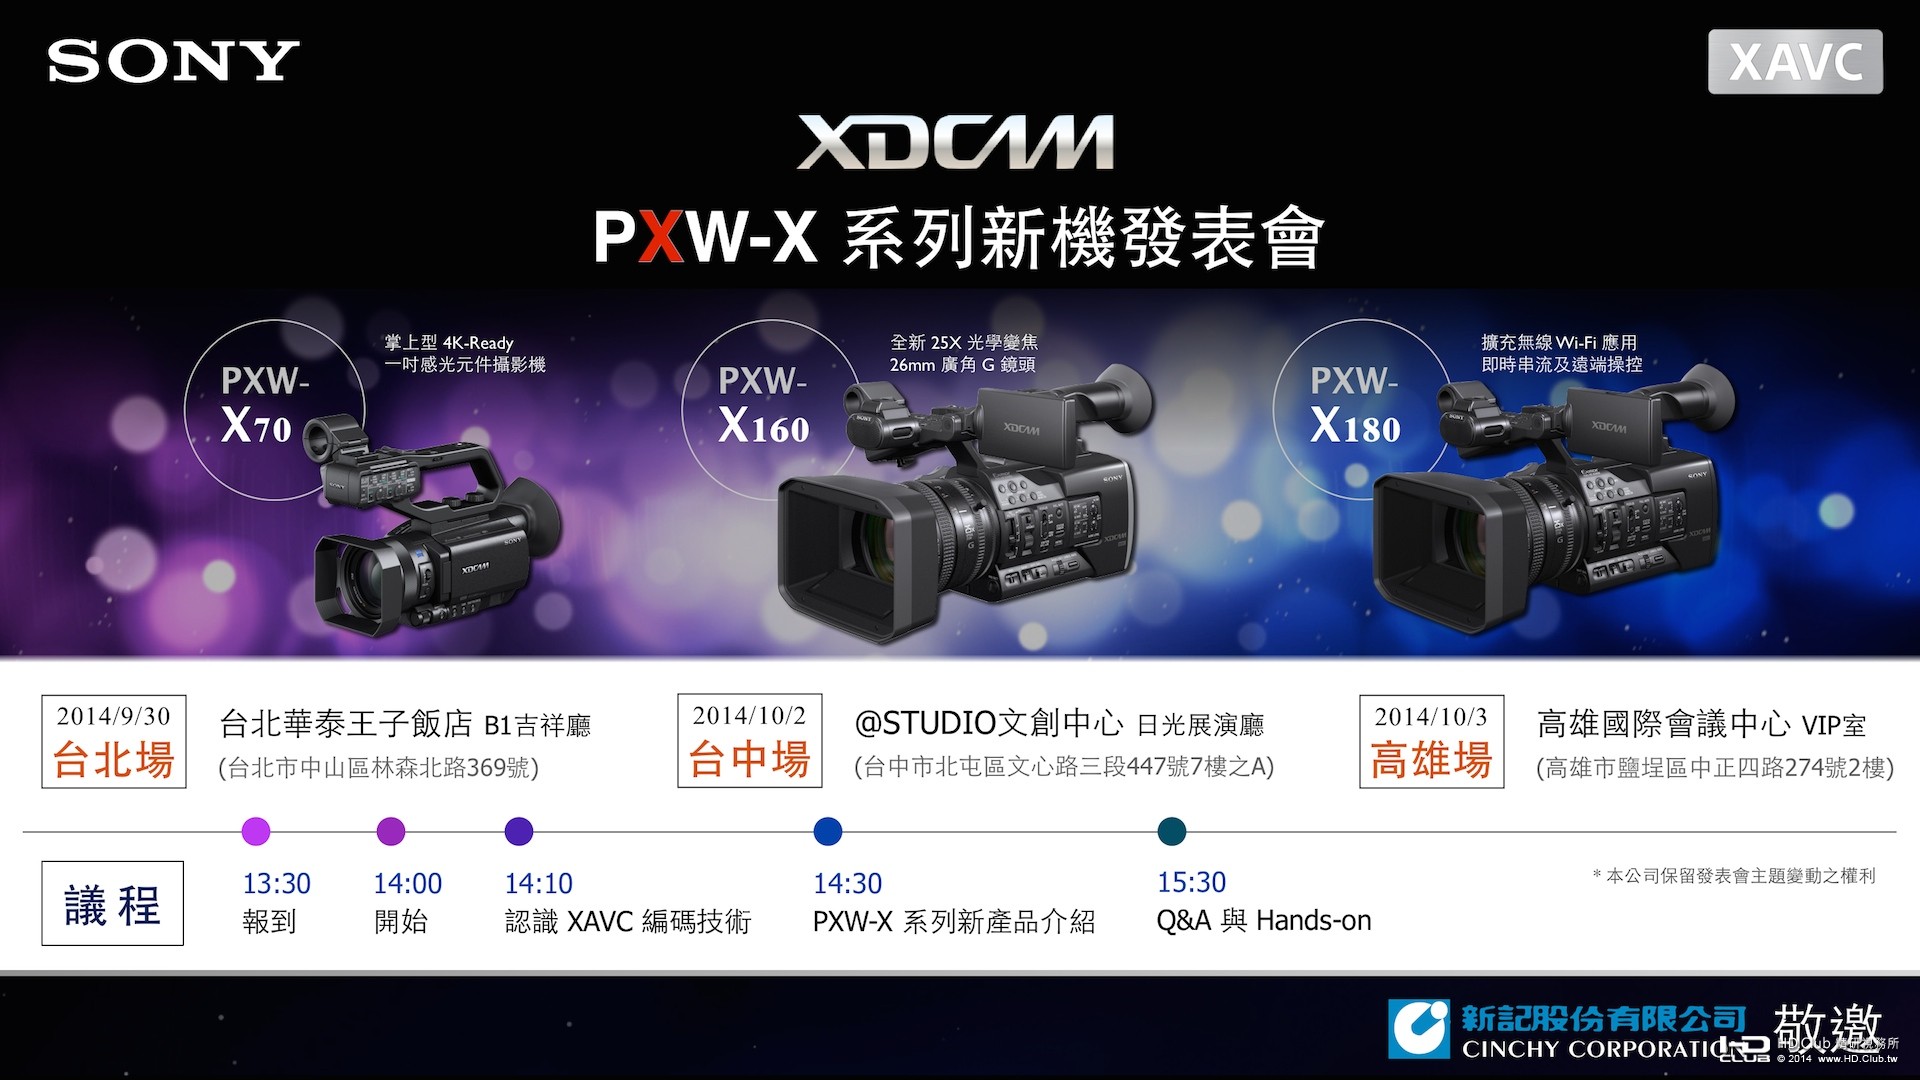 PXW-X 系列新機發表會邀請函.jpg